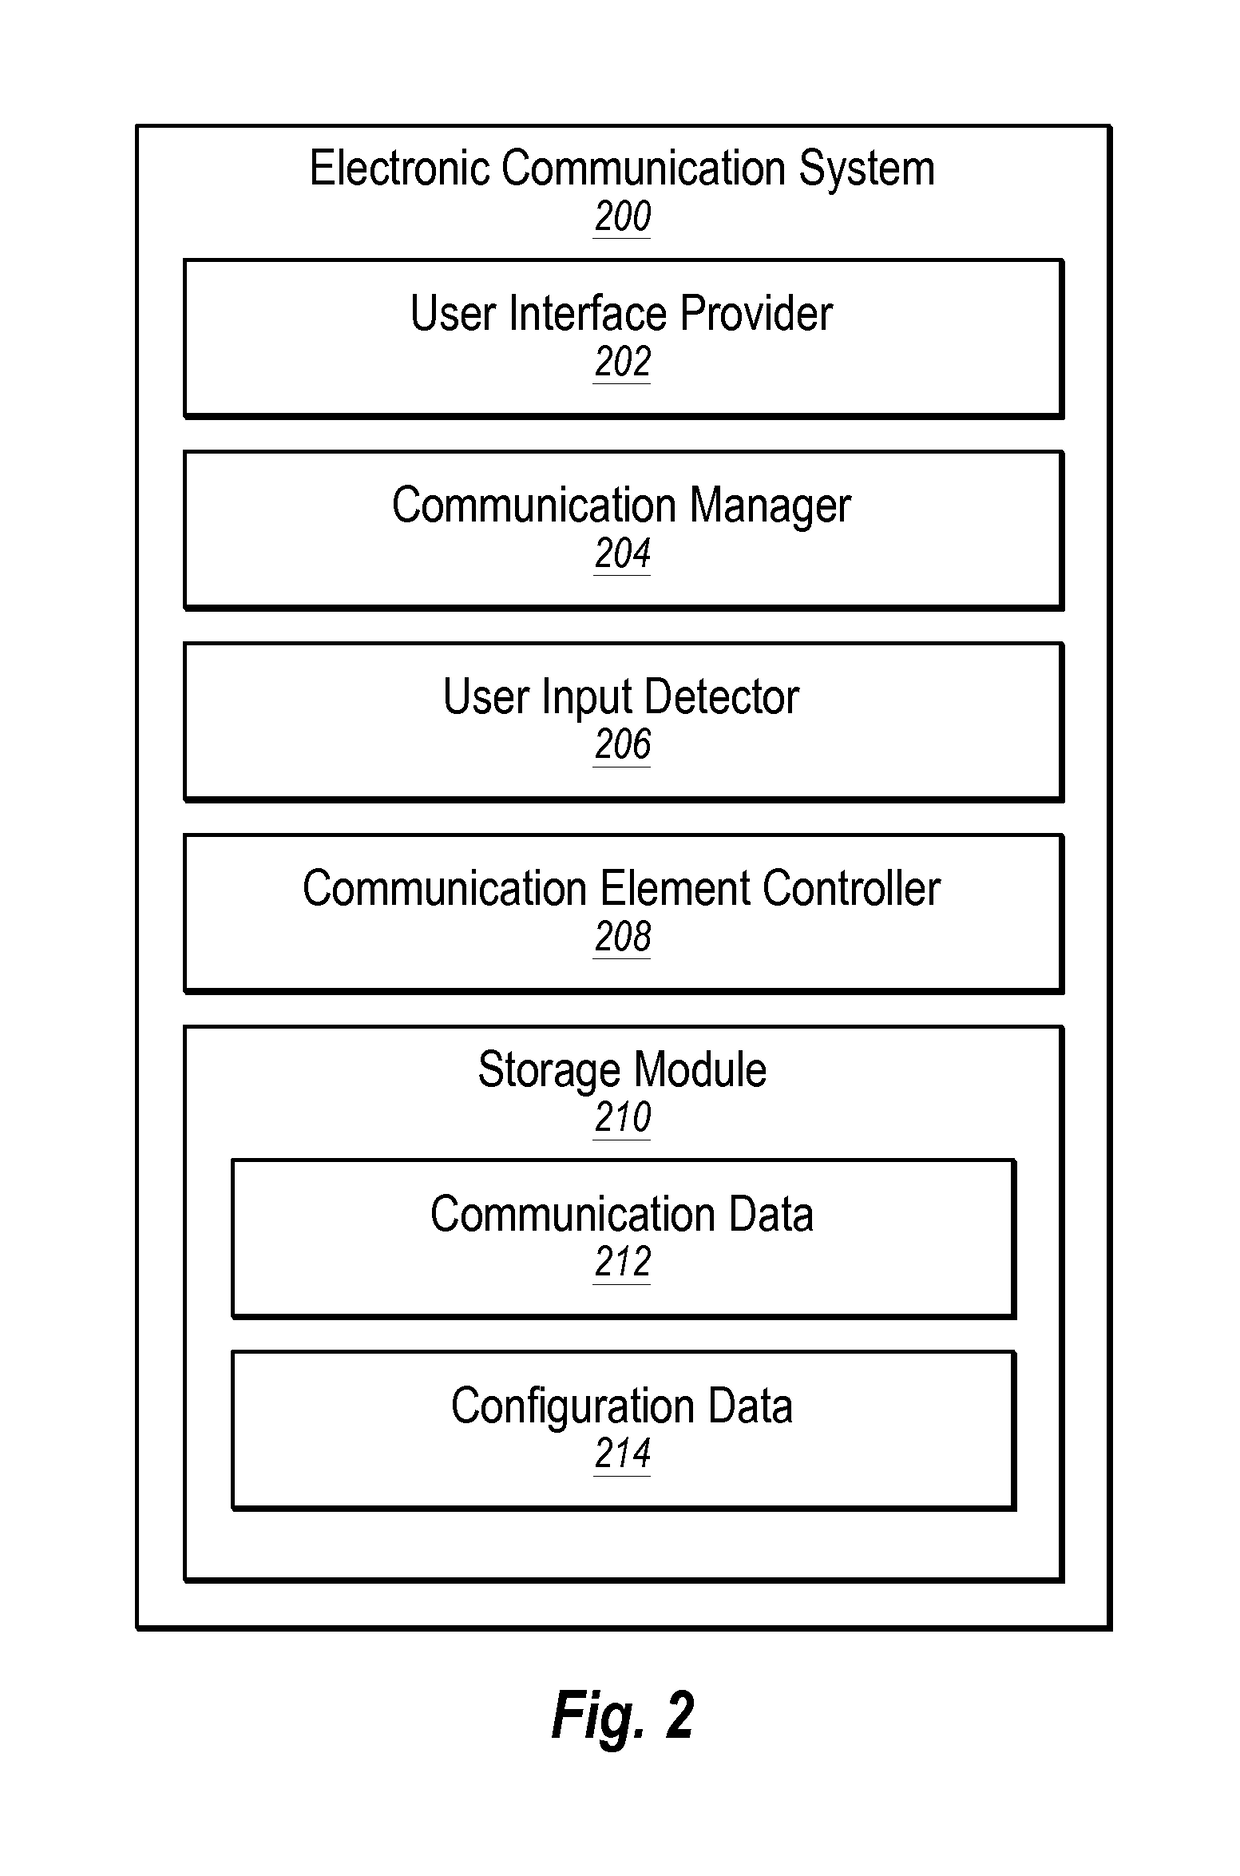 Configurable electronic communication element